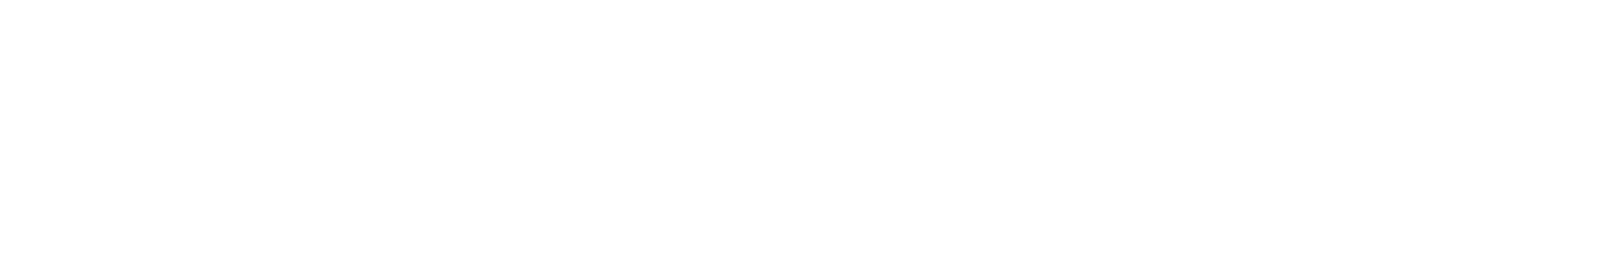 Bron Logo